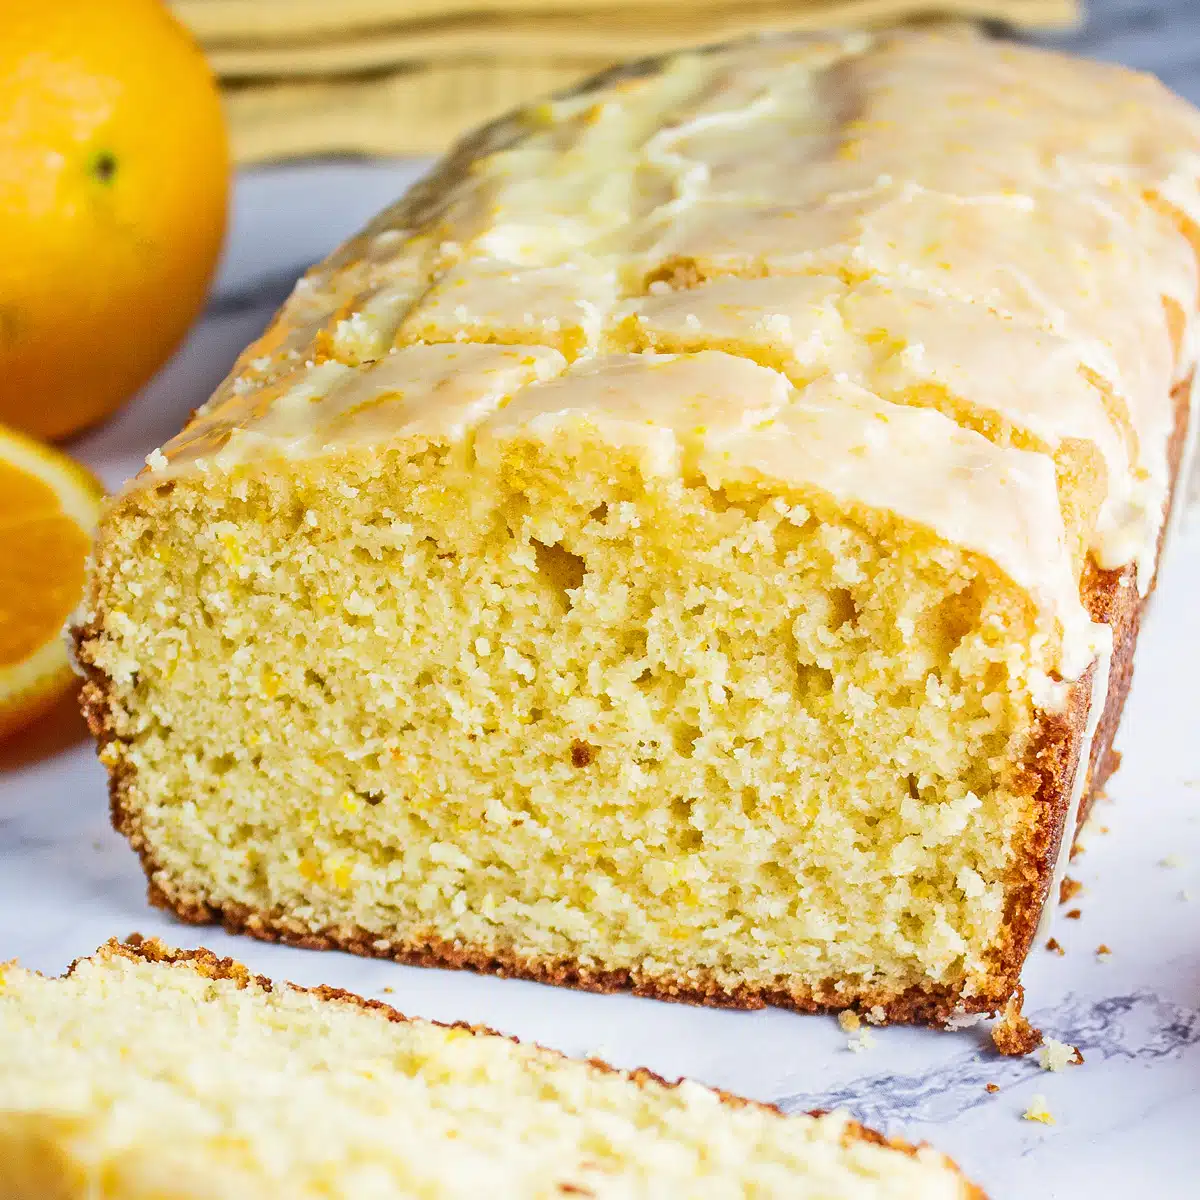 Sliced orange loaf cake with oranges and sliced oranges in the background.